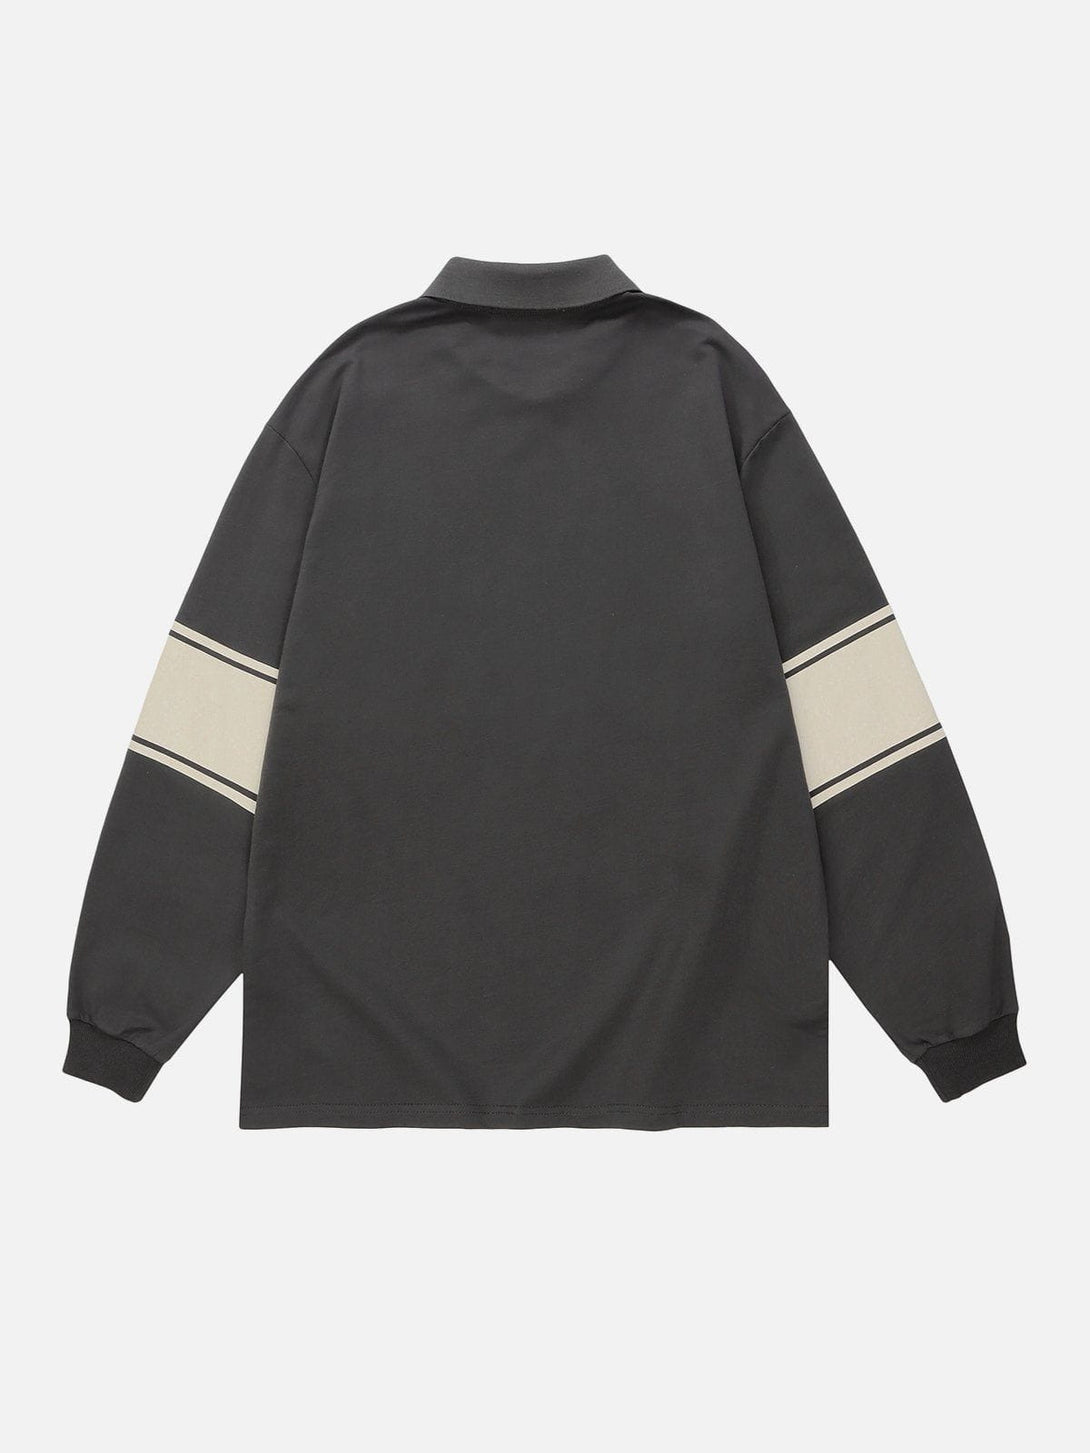 Levefly - Spliced Letters Polo Collar Sweatshirt - Streetwear Fashion - levefly.com